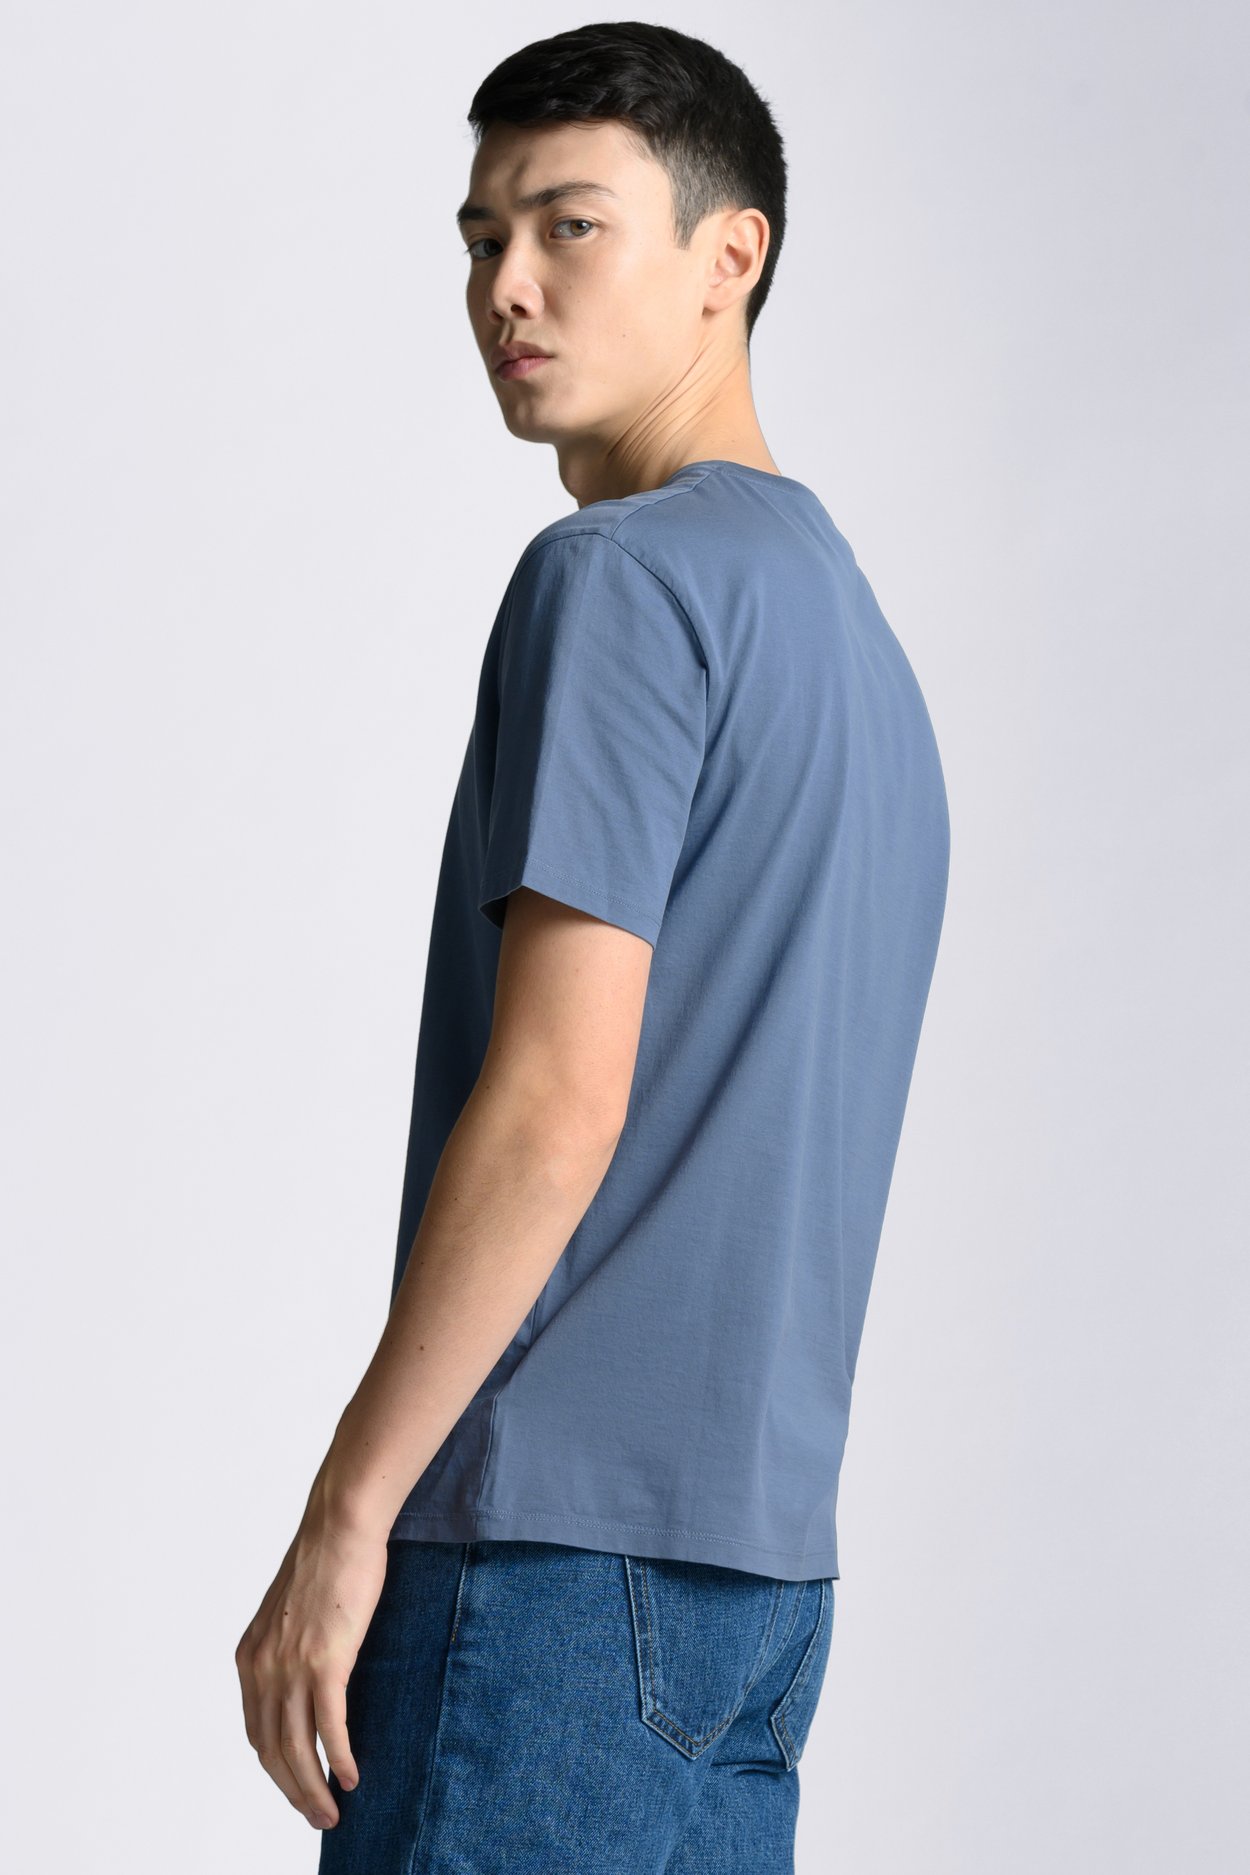 Cold Blue Lightweight T-Shirt | ELS Cotton Crewneck - ASKET